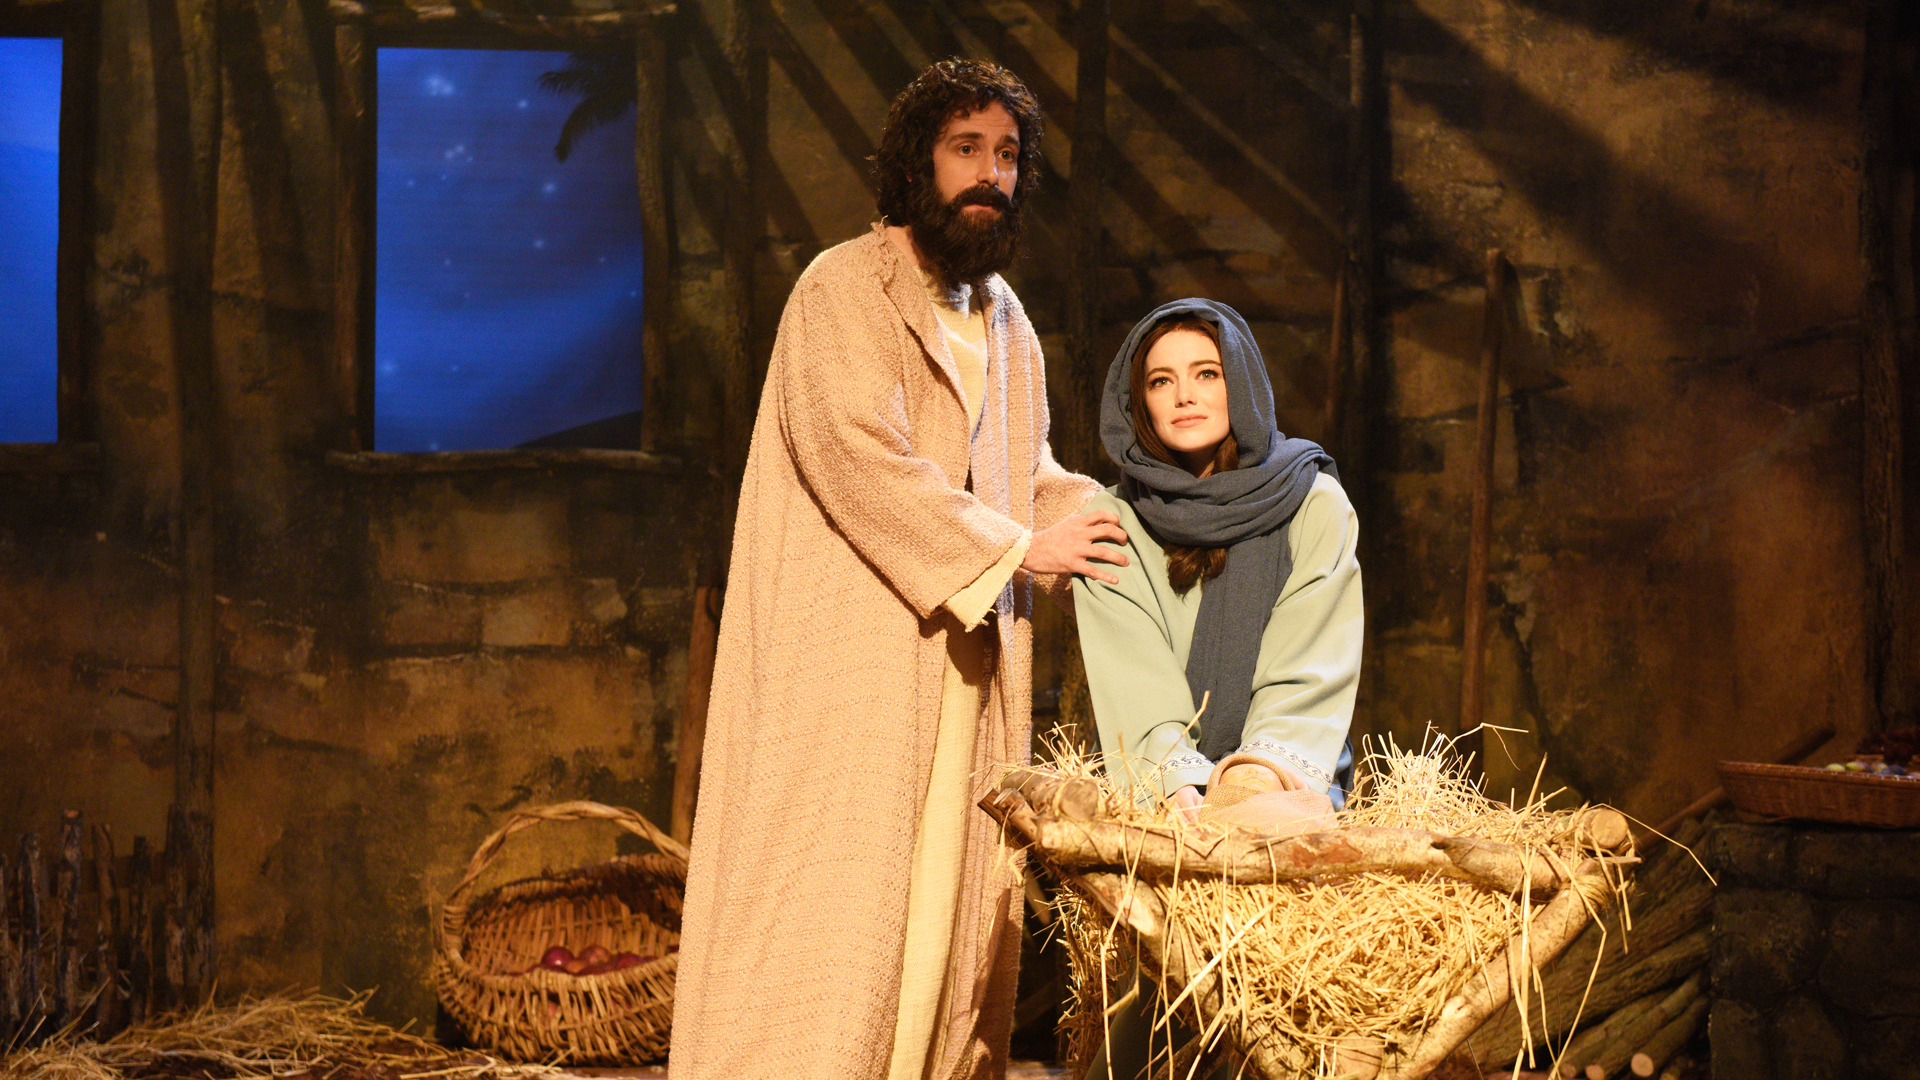 Watch The Nativity From Saturday Night Live - NBC.com